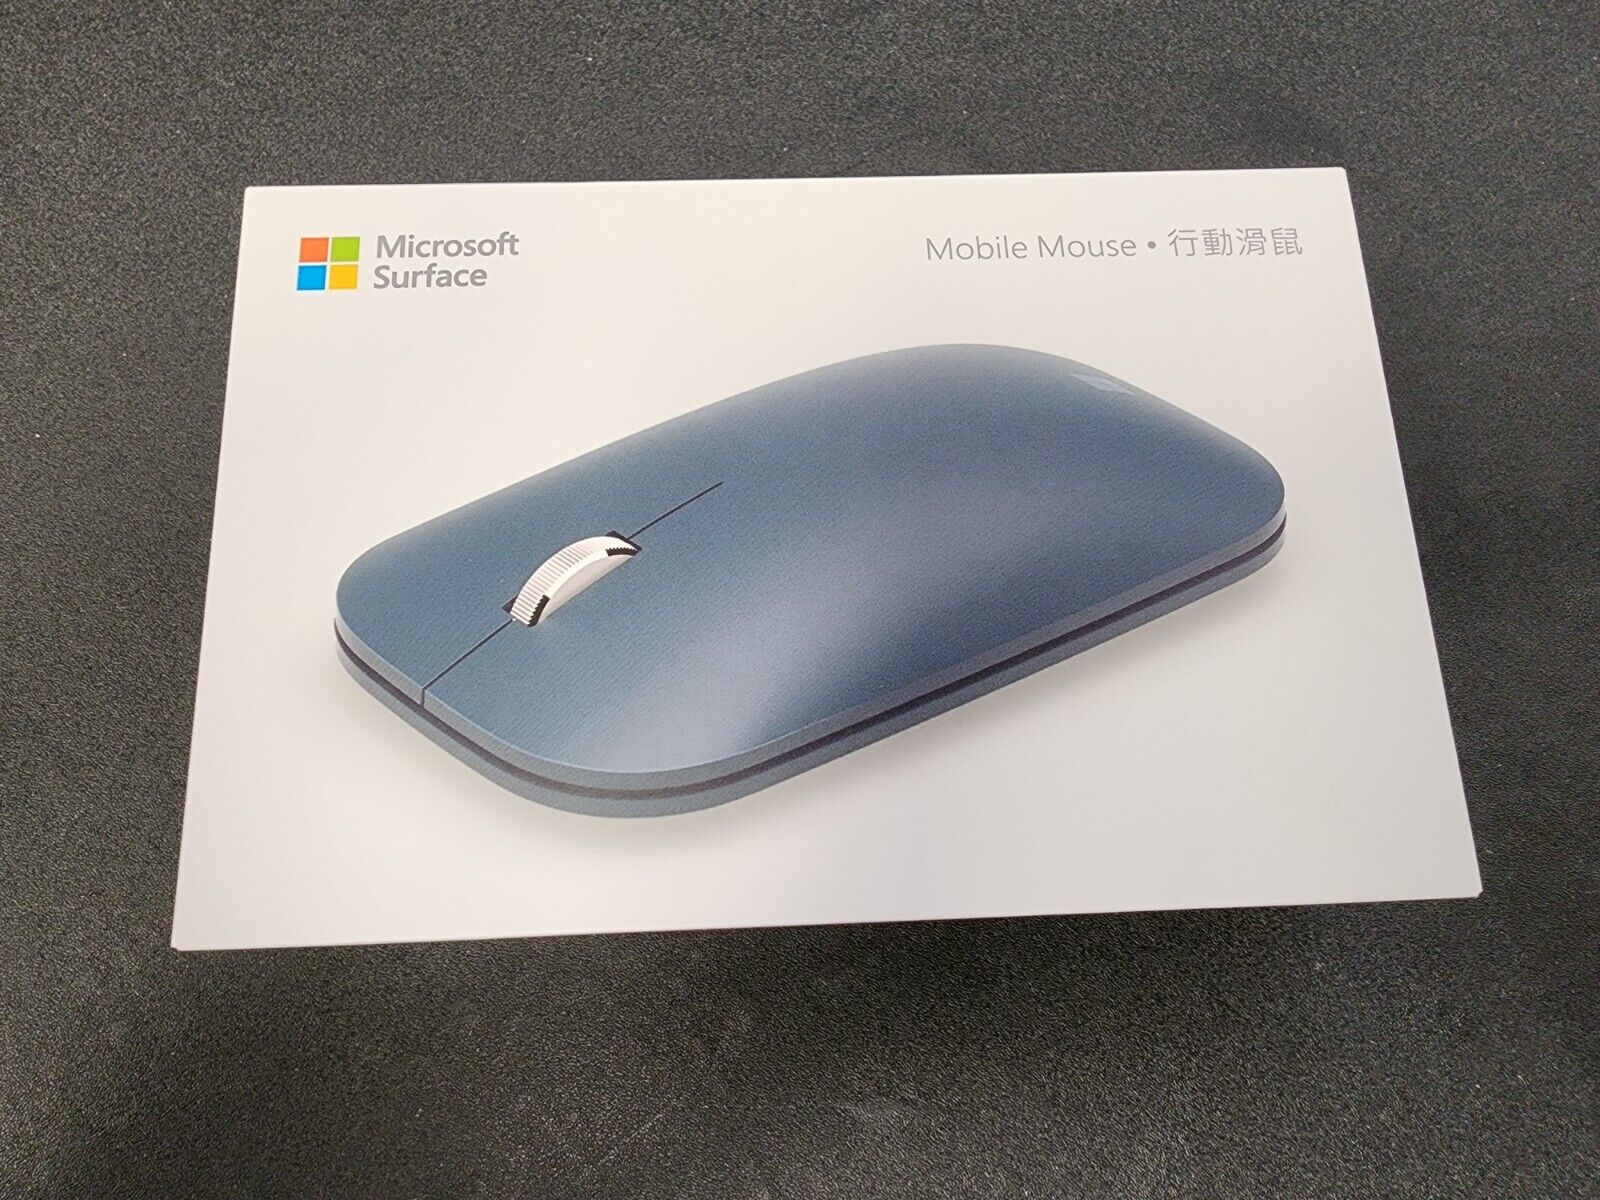 Microsoft Modern Mobile Mouse - Blue KGZ-00025 MODEL 1679/1679C NEW